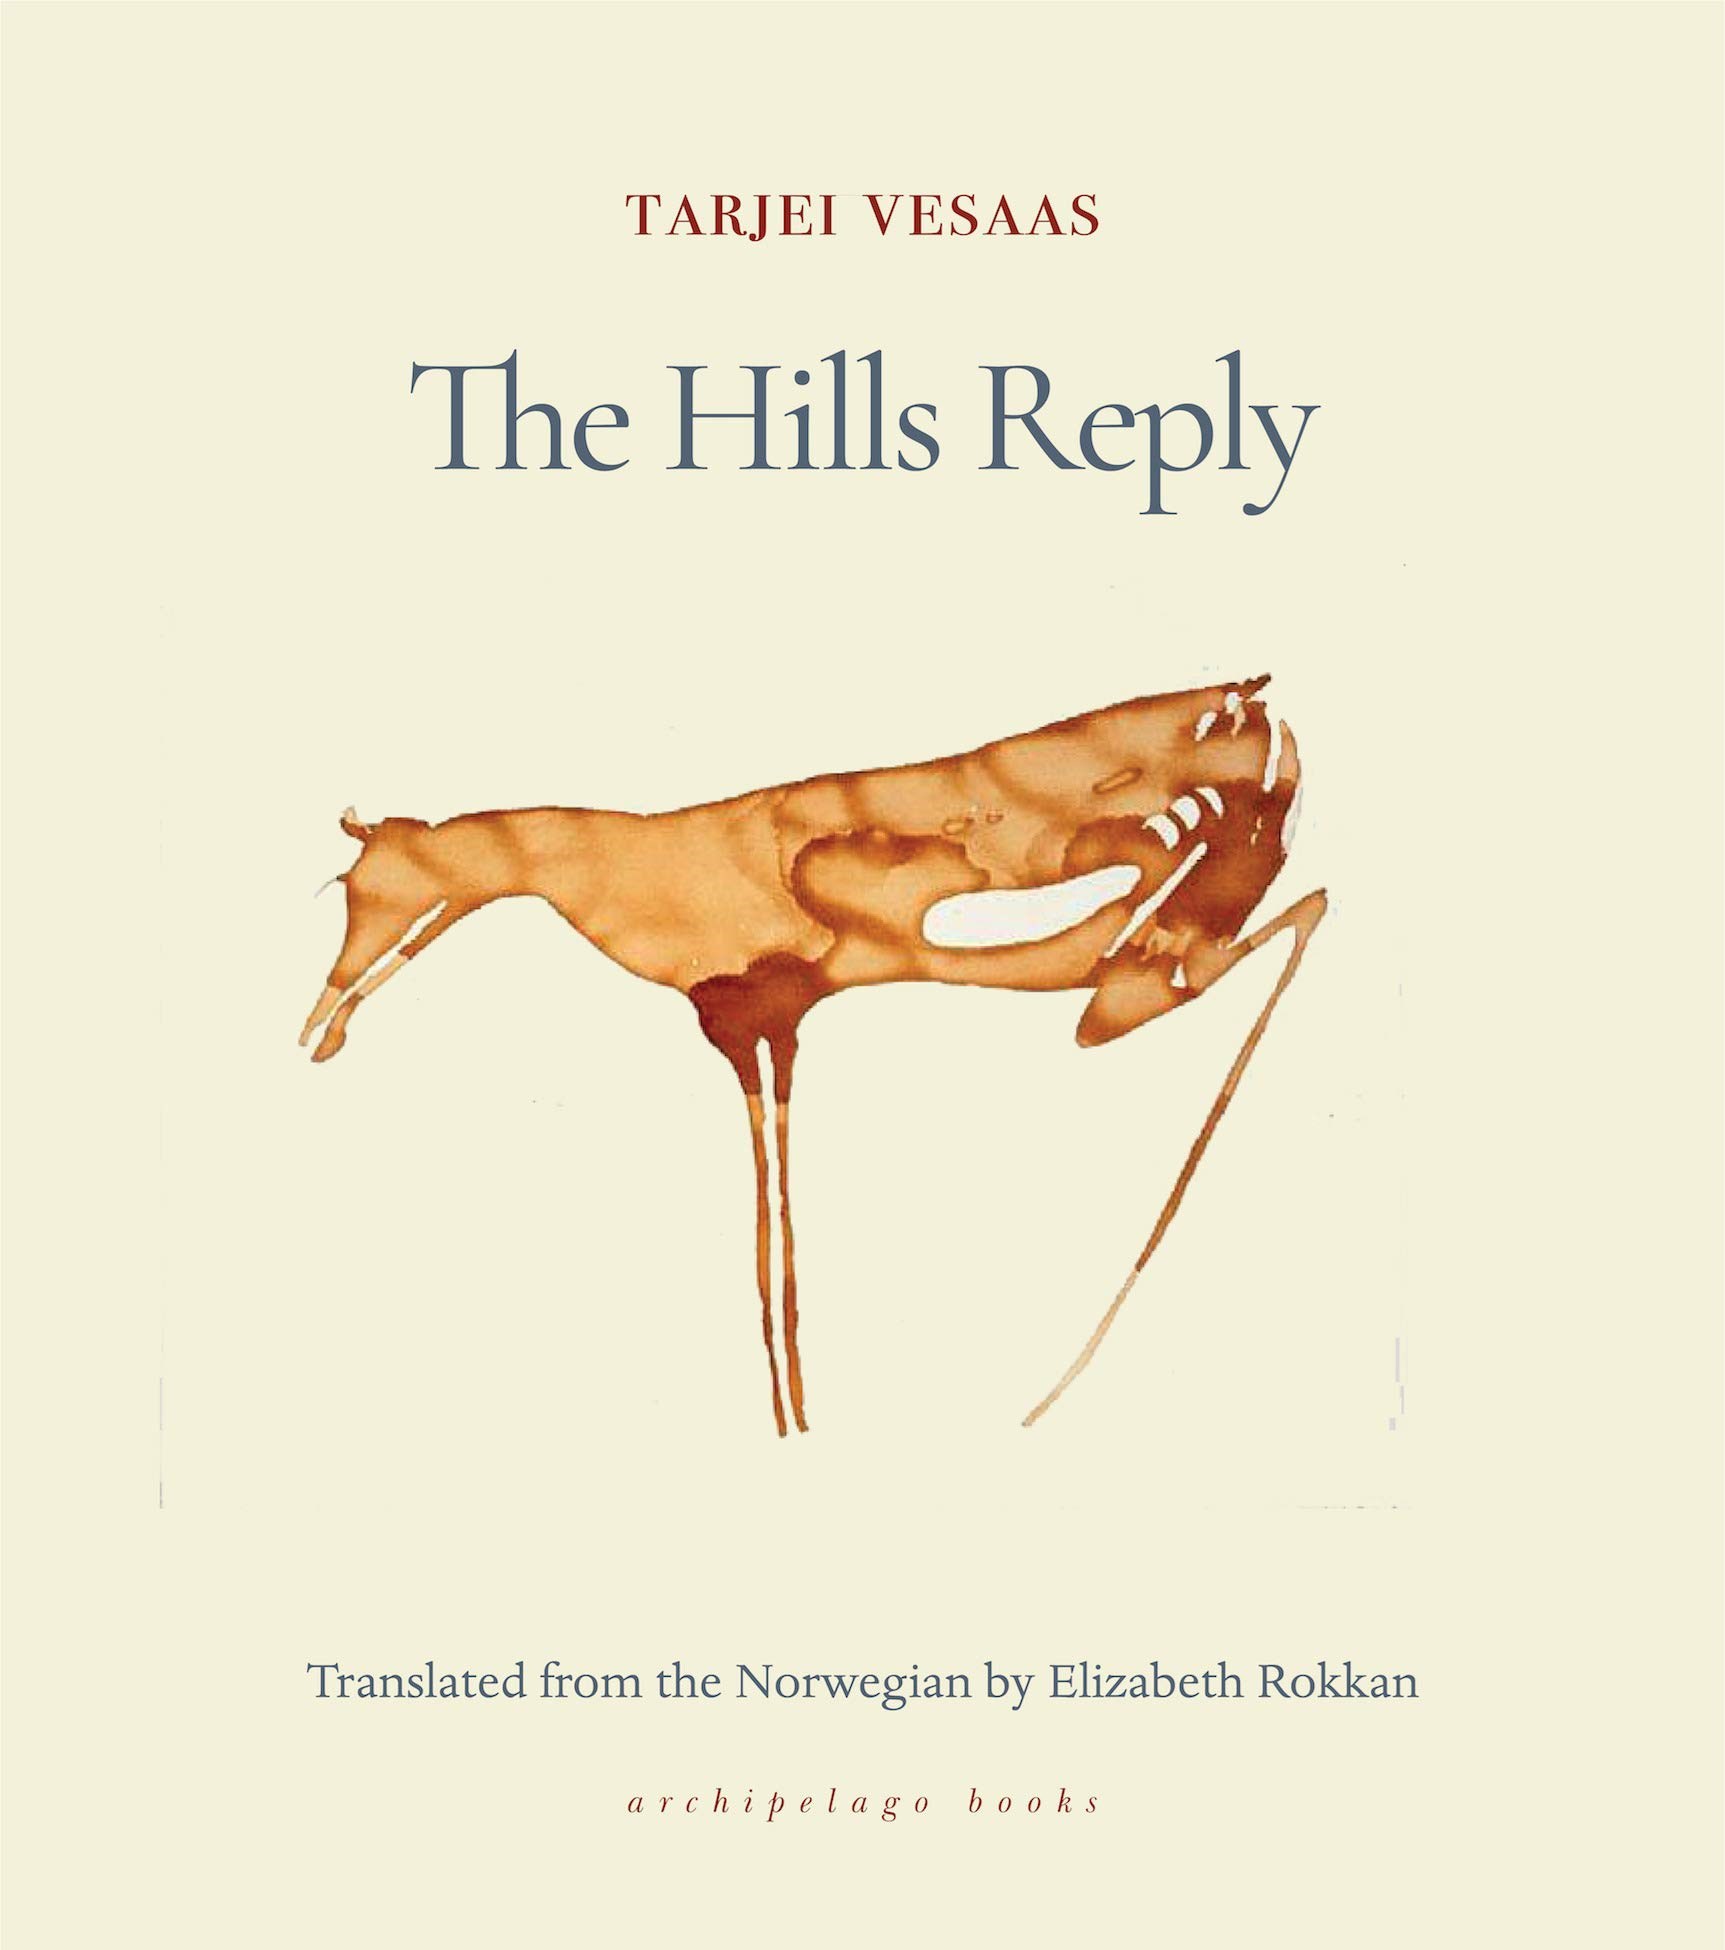 The Hills Reply by Tarjei Vesaas